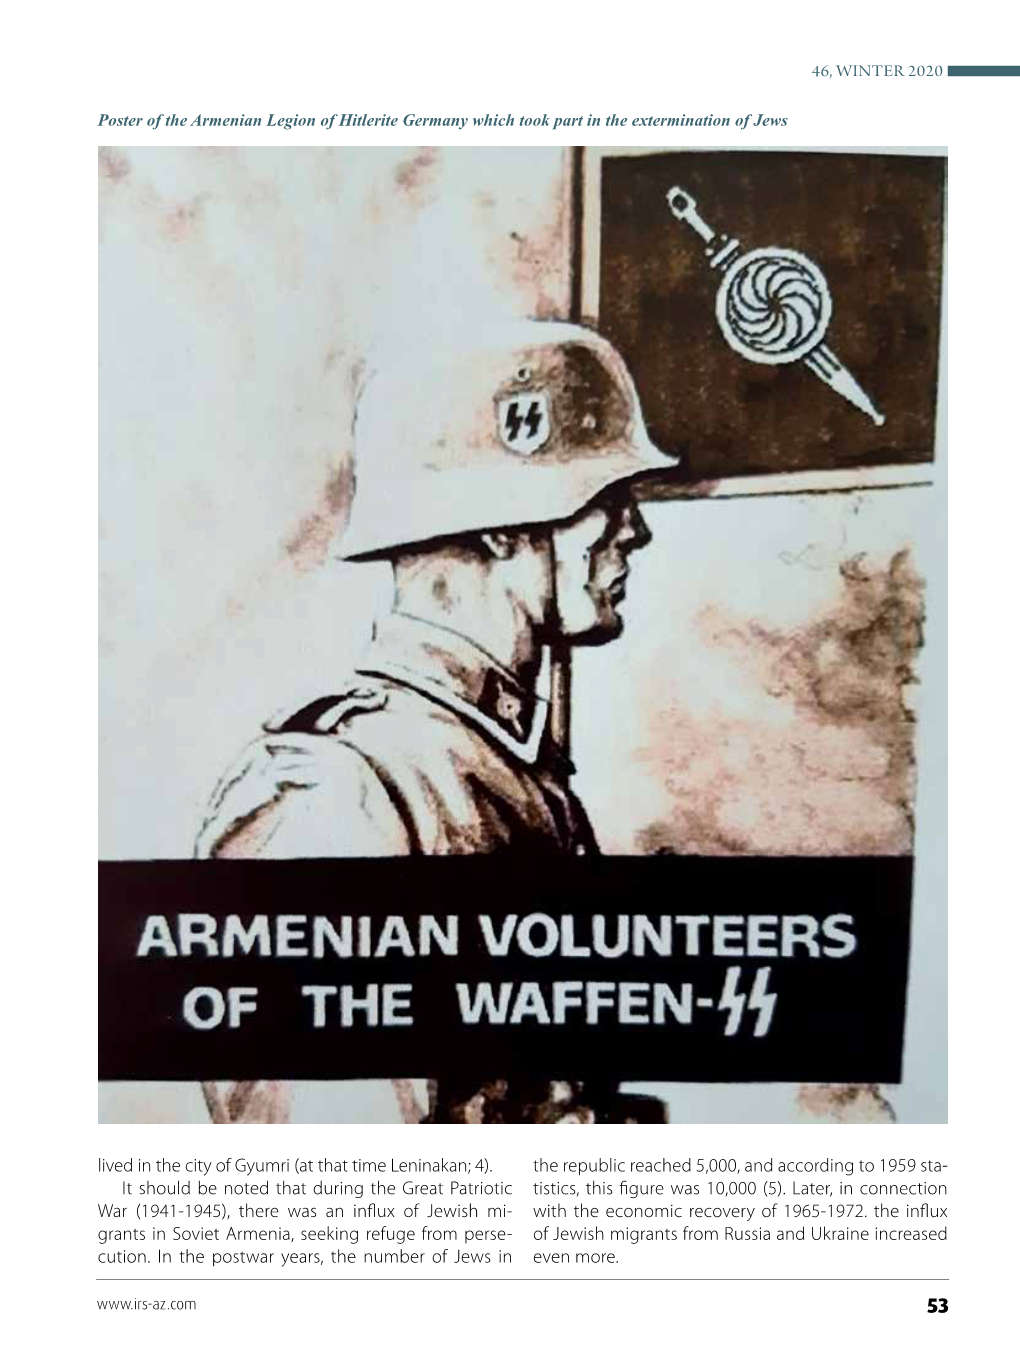 Anti-Semitism and the Life of Jews in Armenia